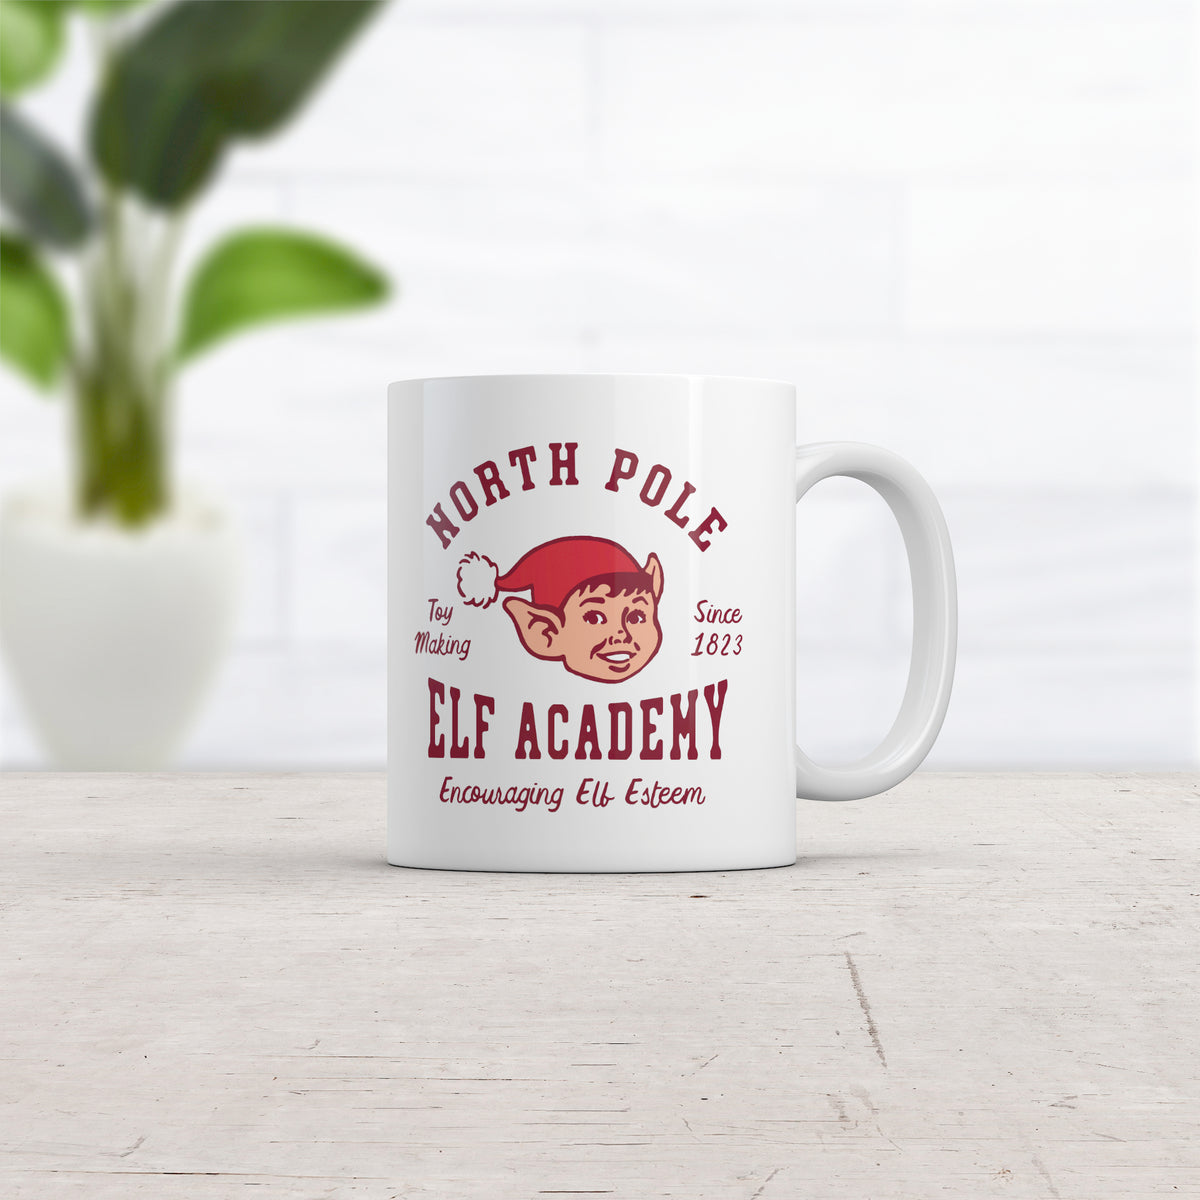 North Pole Elf Academy Mug